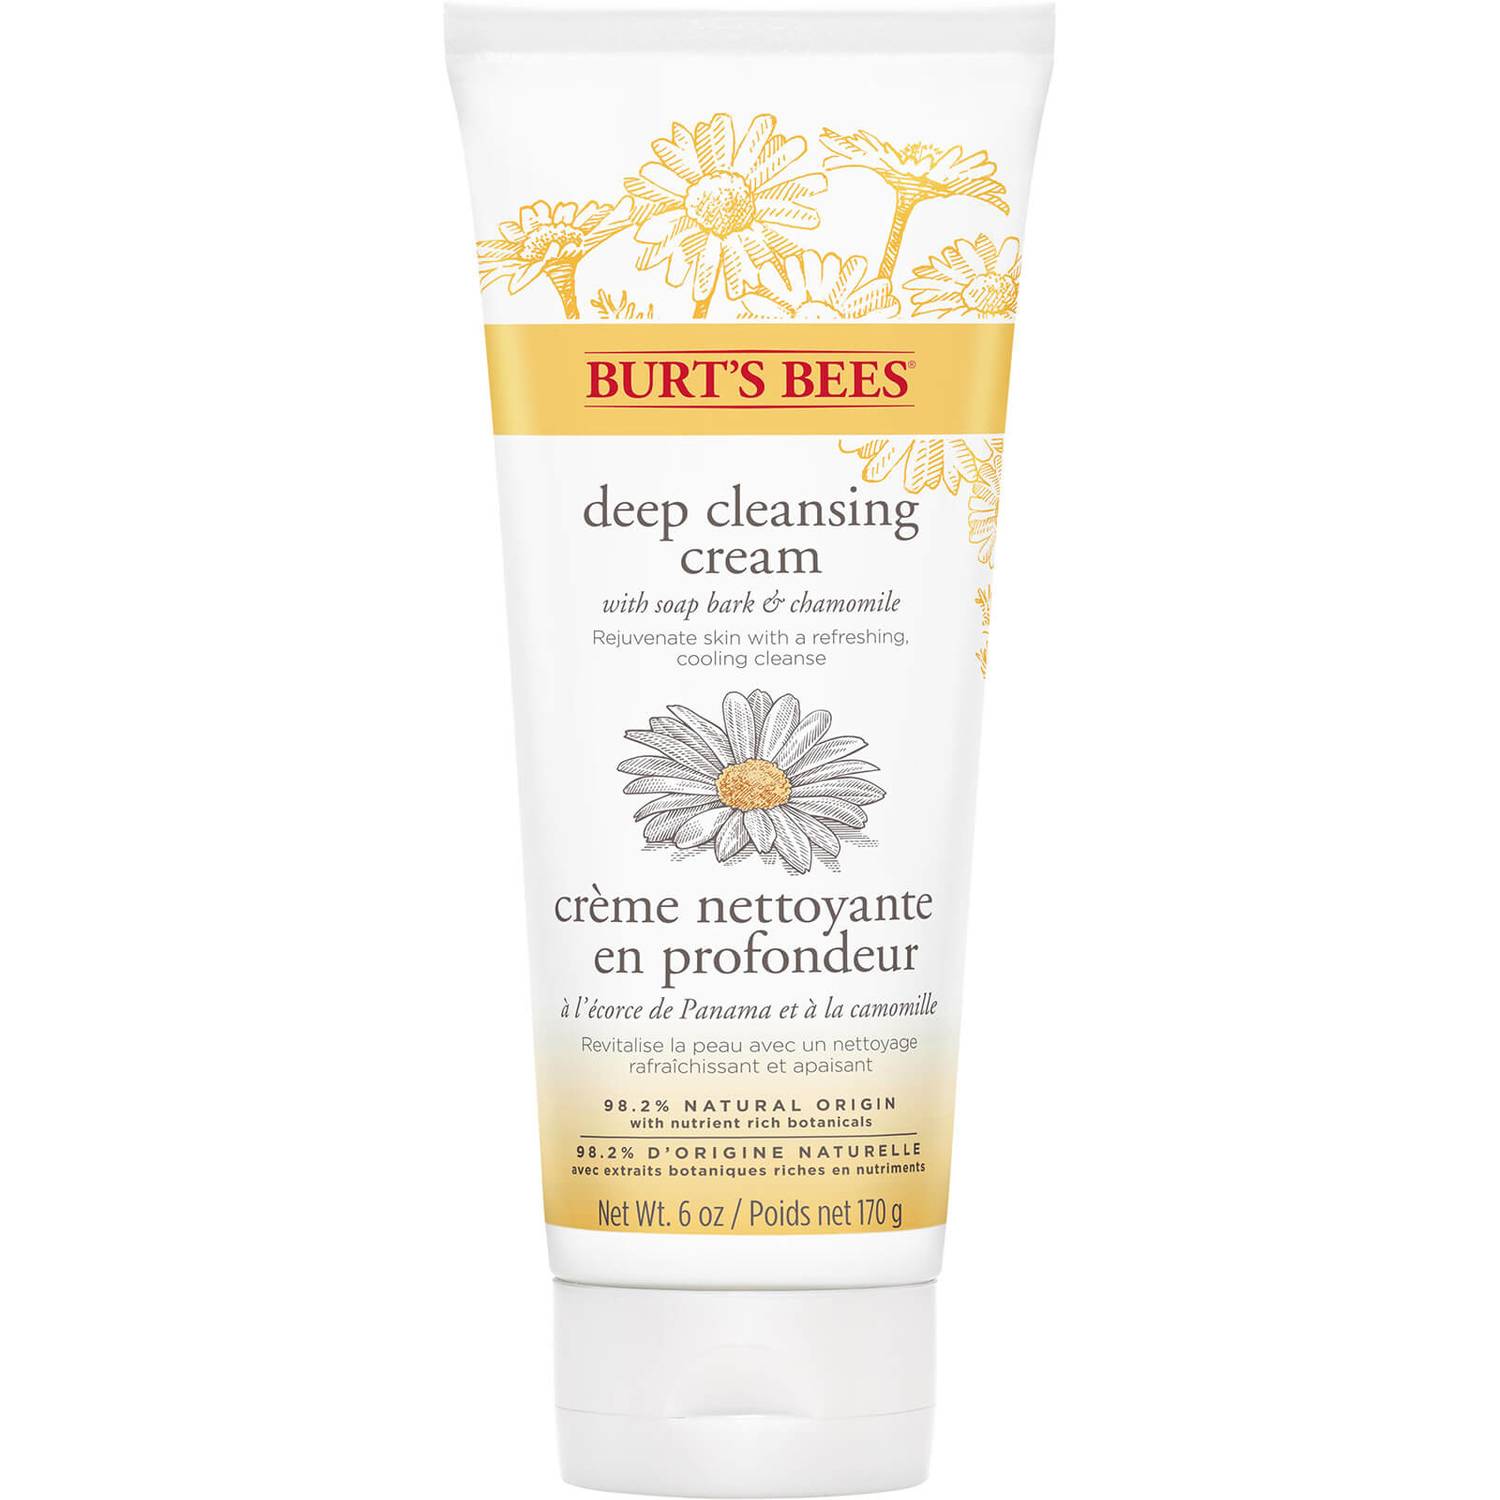 Burts Bees Deep Cleansing Cream - Soap Bark & Chamomile Image